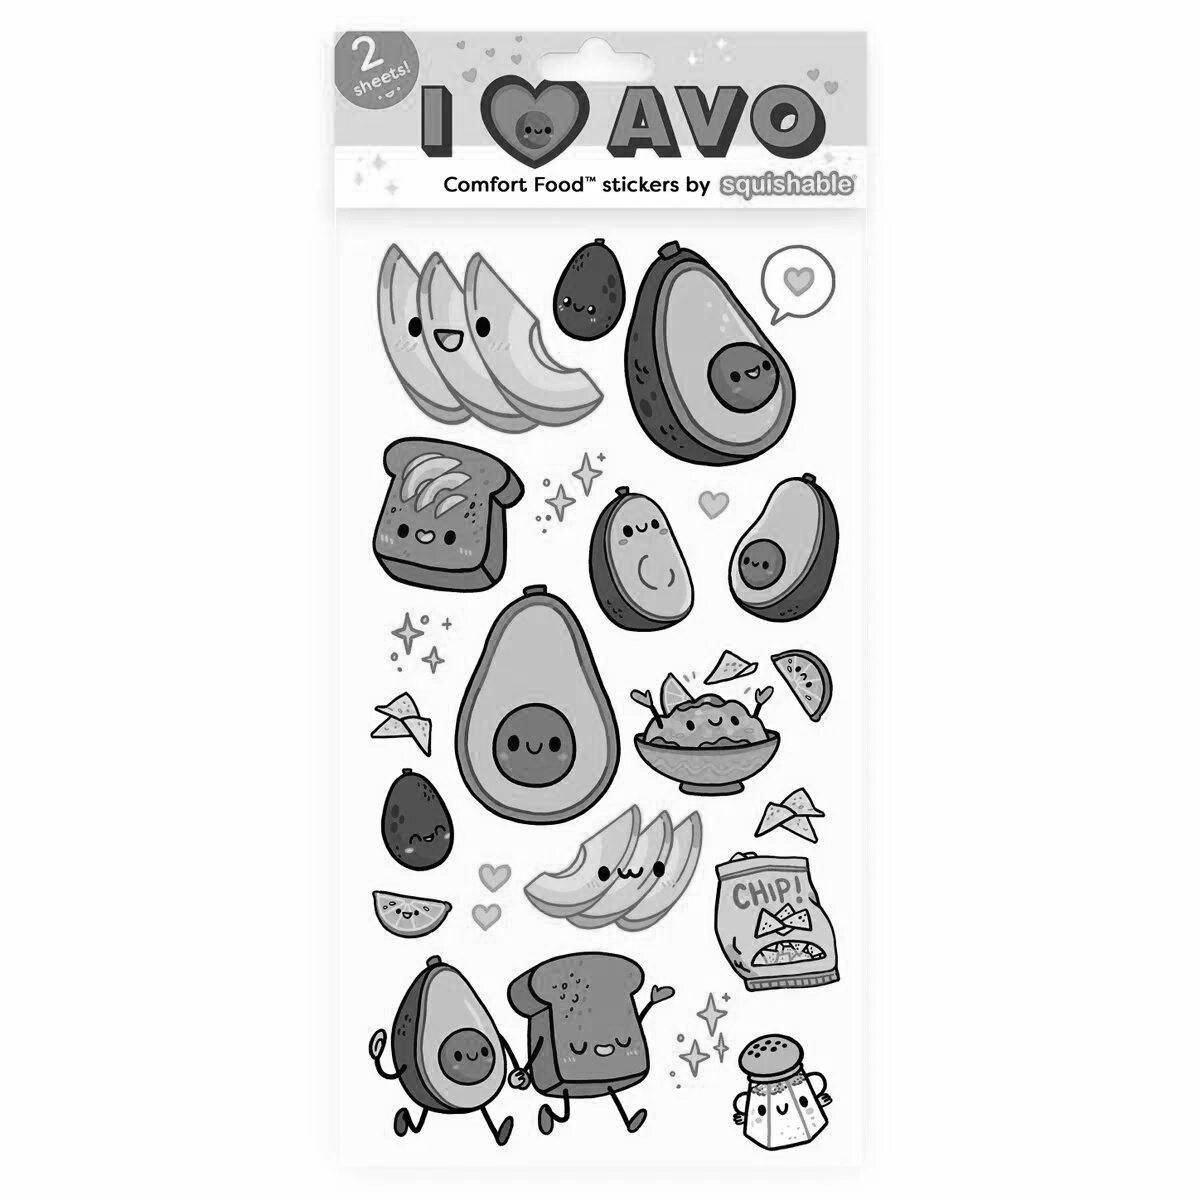 Attractive avocado sticker